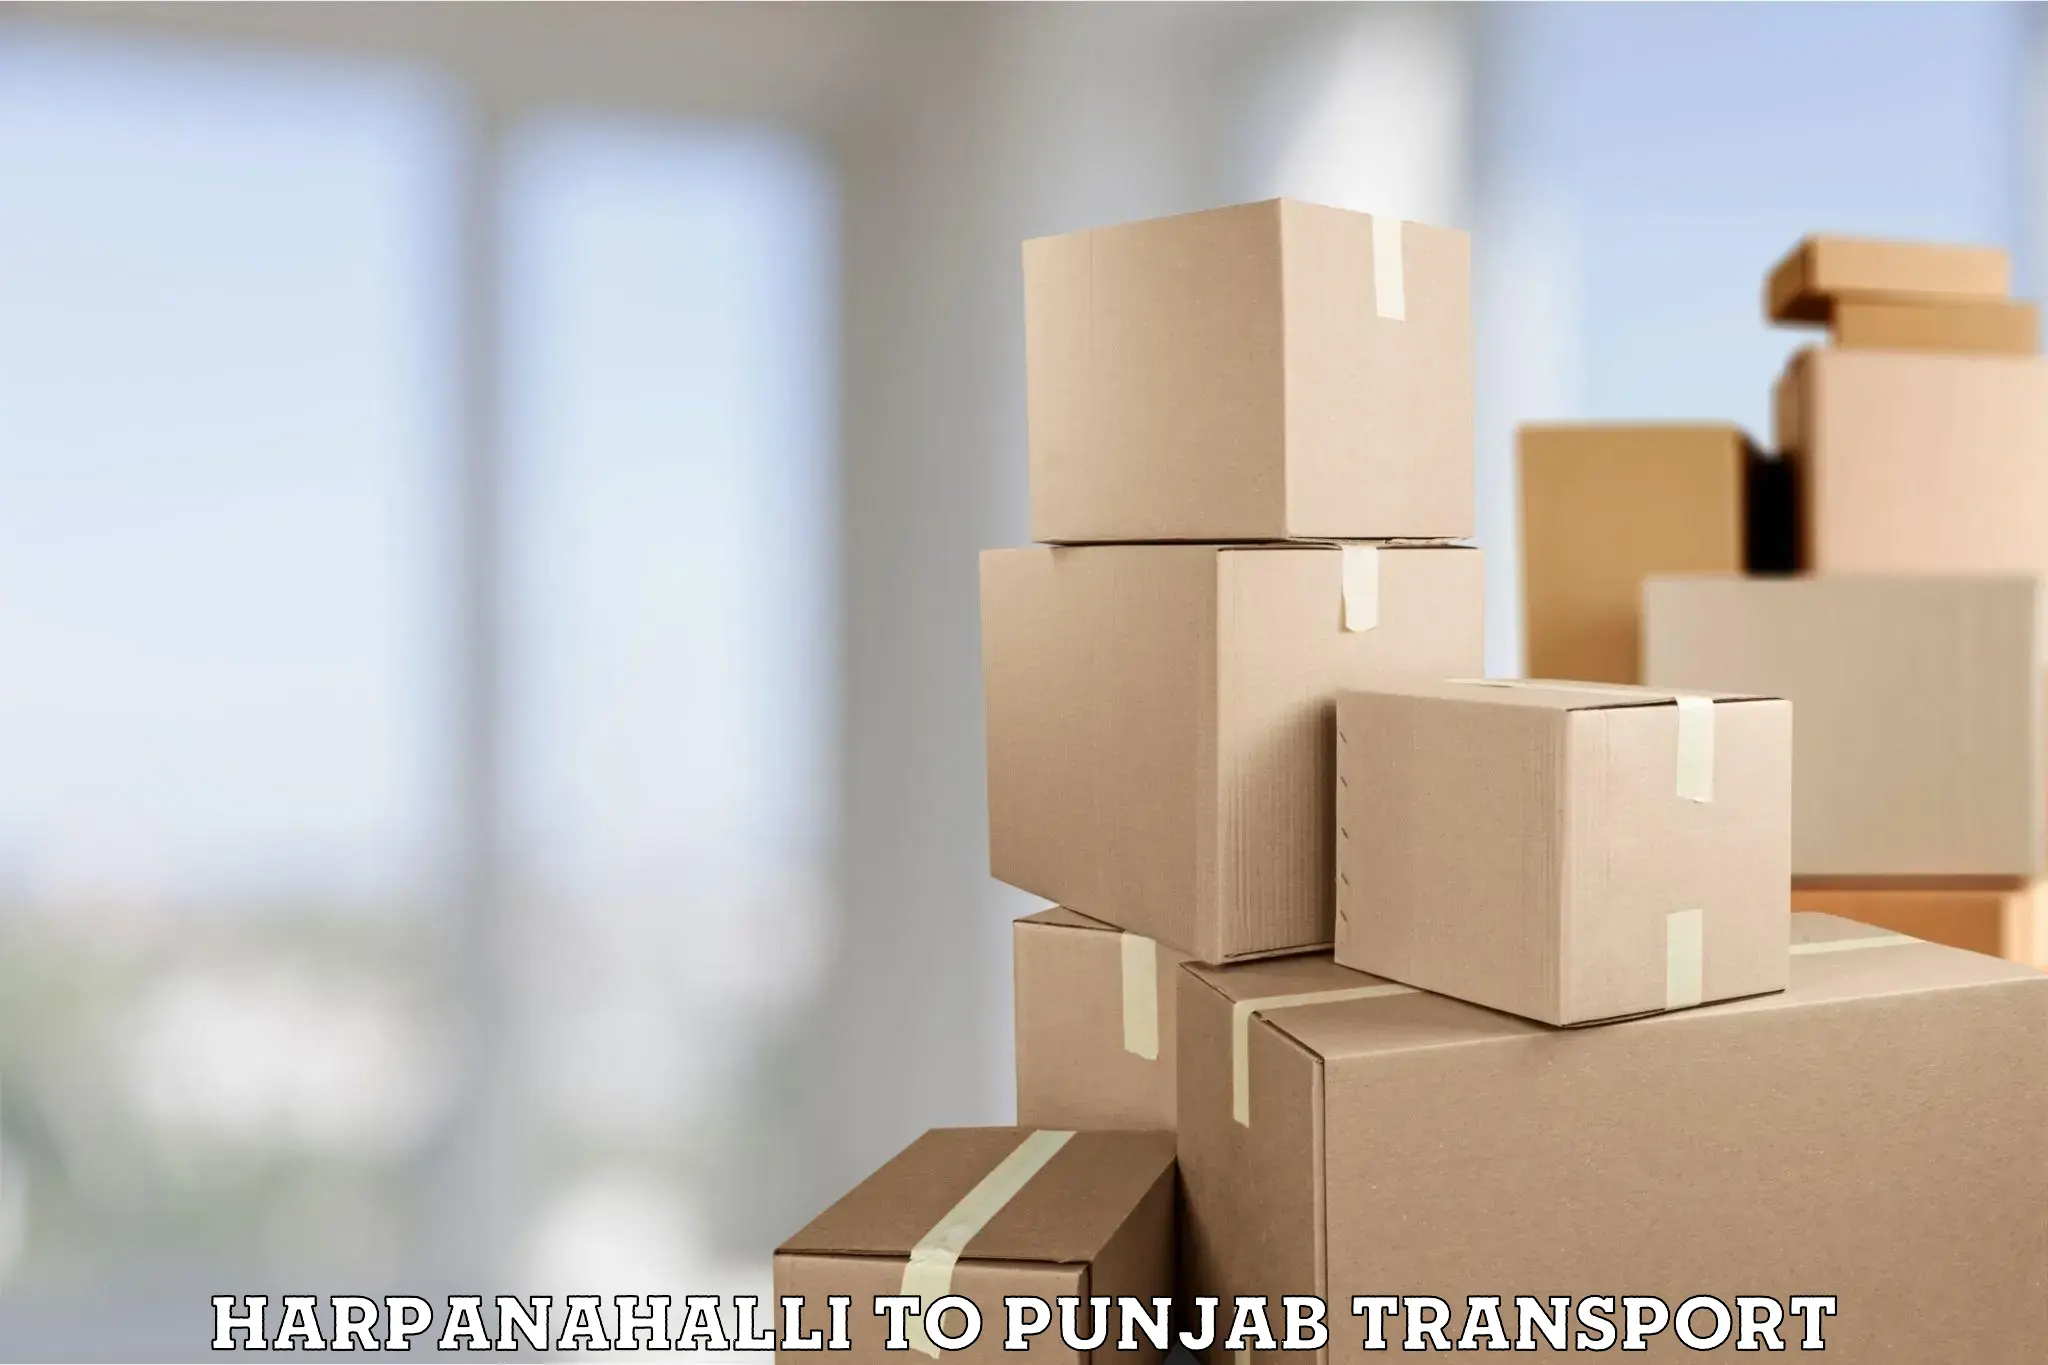 Bike shipping service Harpanahalli to Punjab